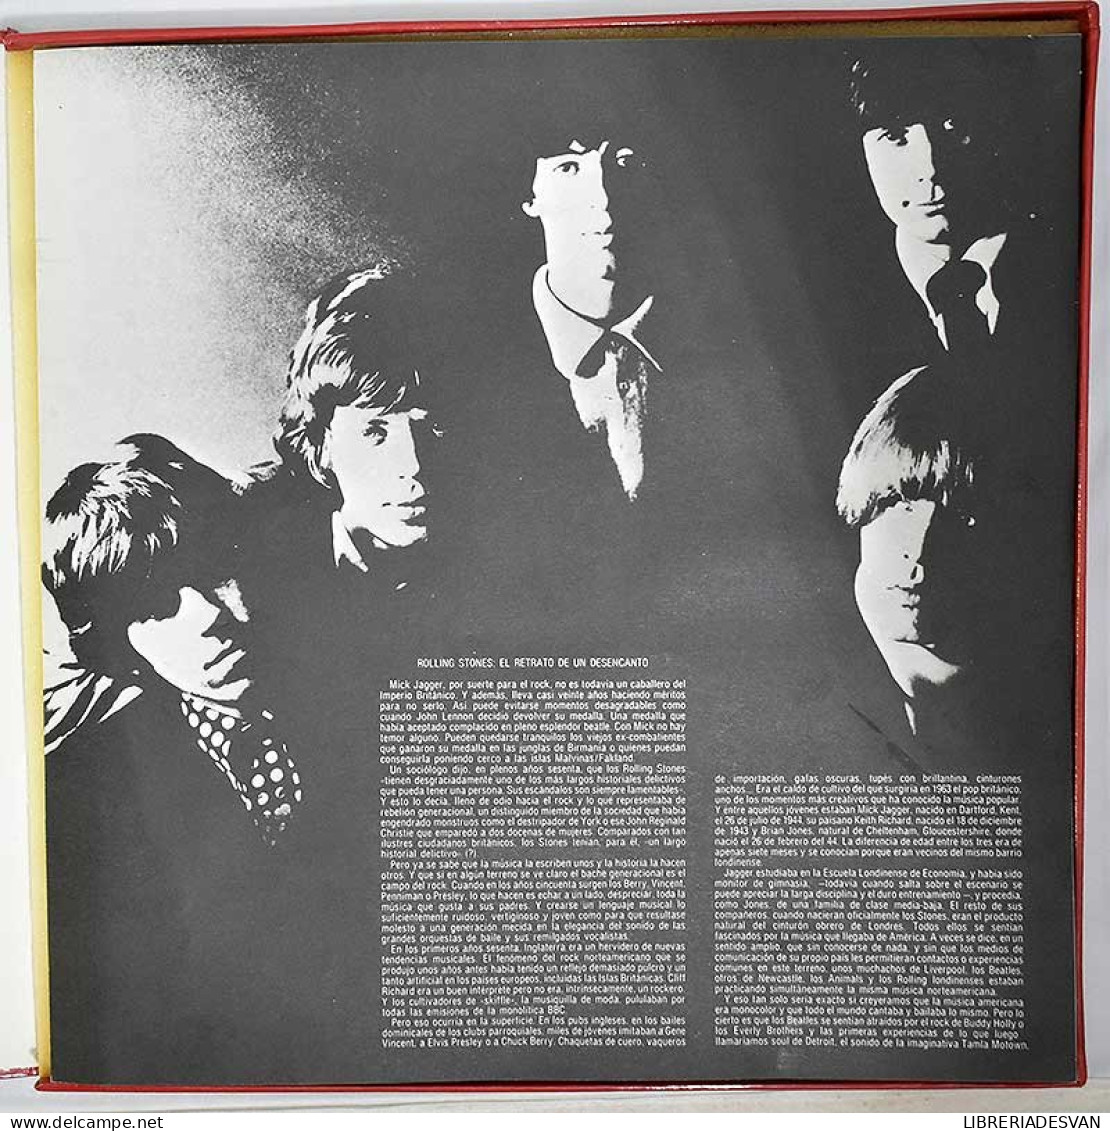 The Rolling Stones 20 Years. Vol. 2. Caja 6 Musicassettes - Audiokassetten